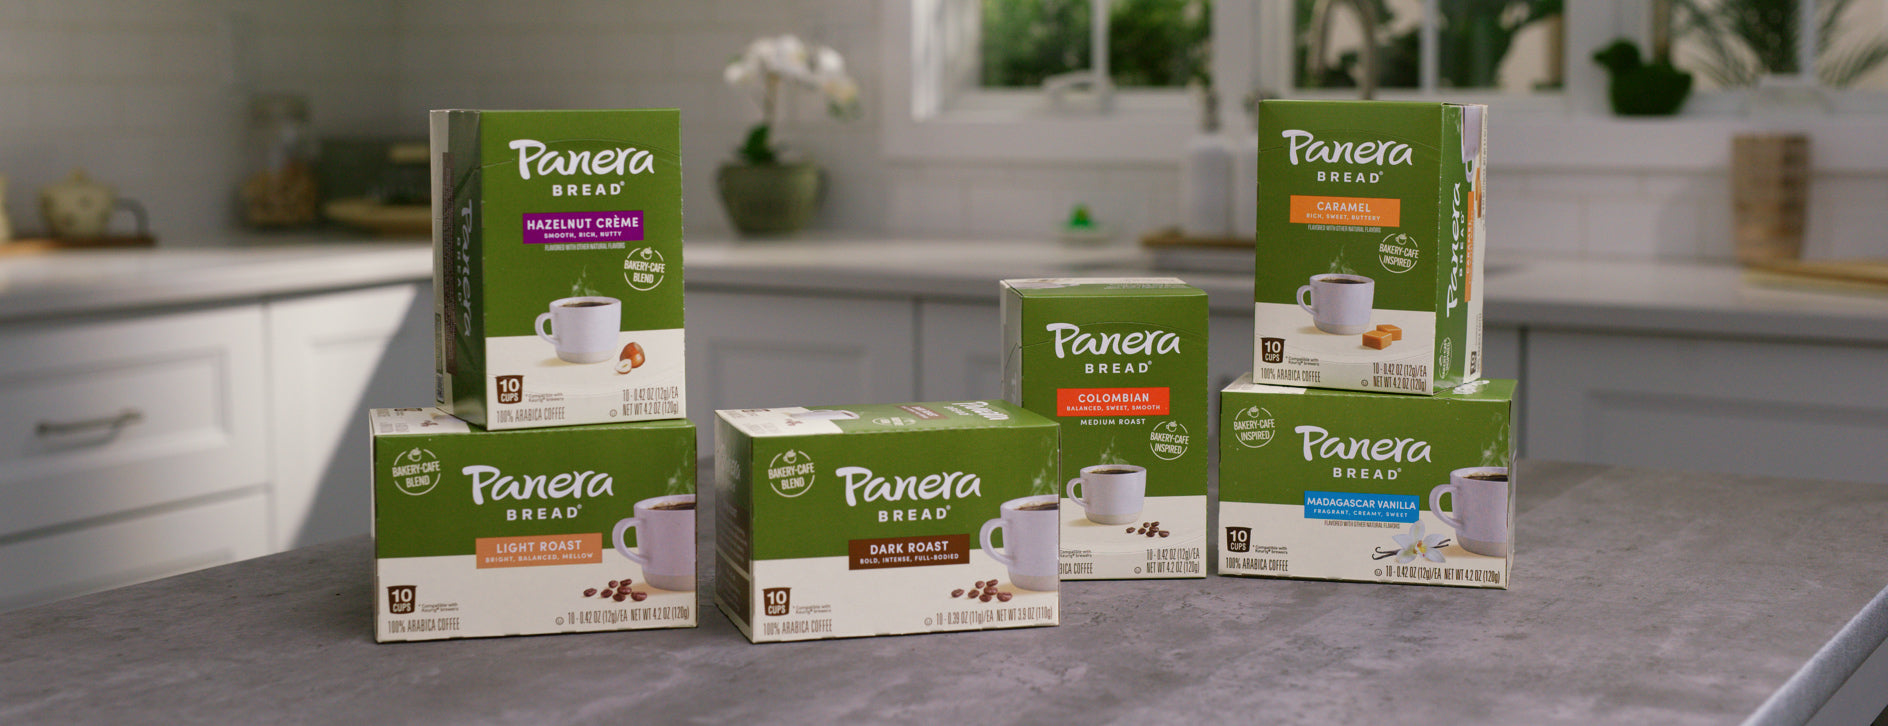 panera coffee 10 ct cartons on kitchen table